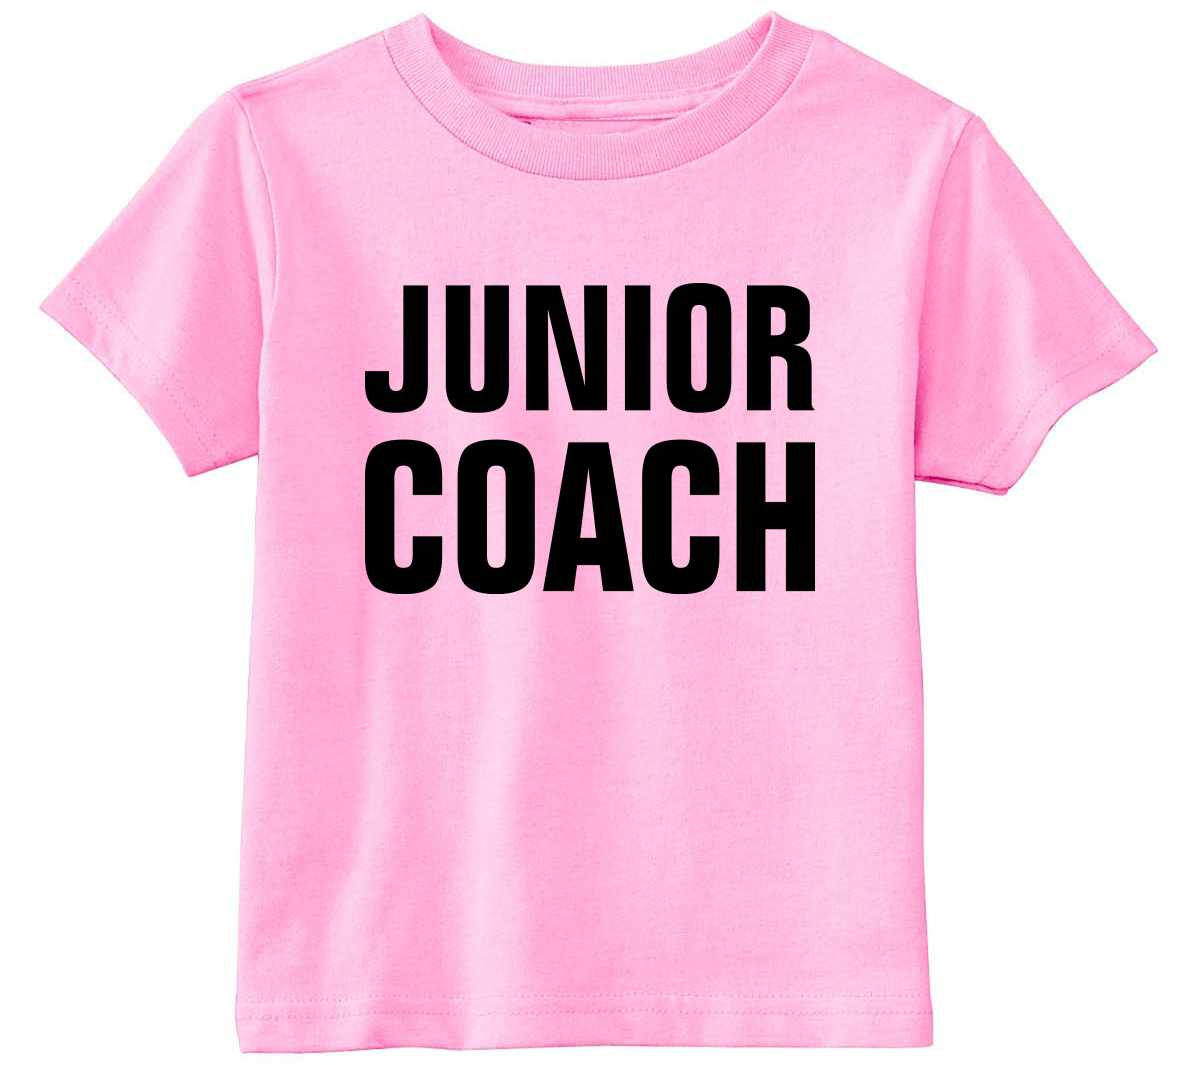 Junior Coach on Infant-Toddler T-Shirt (#1213-7)